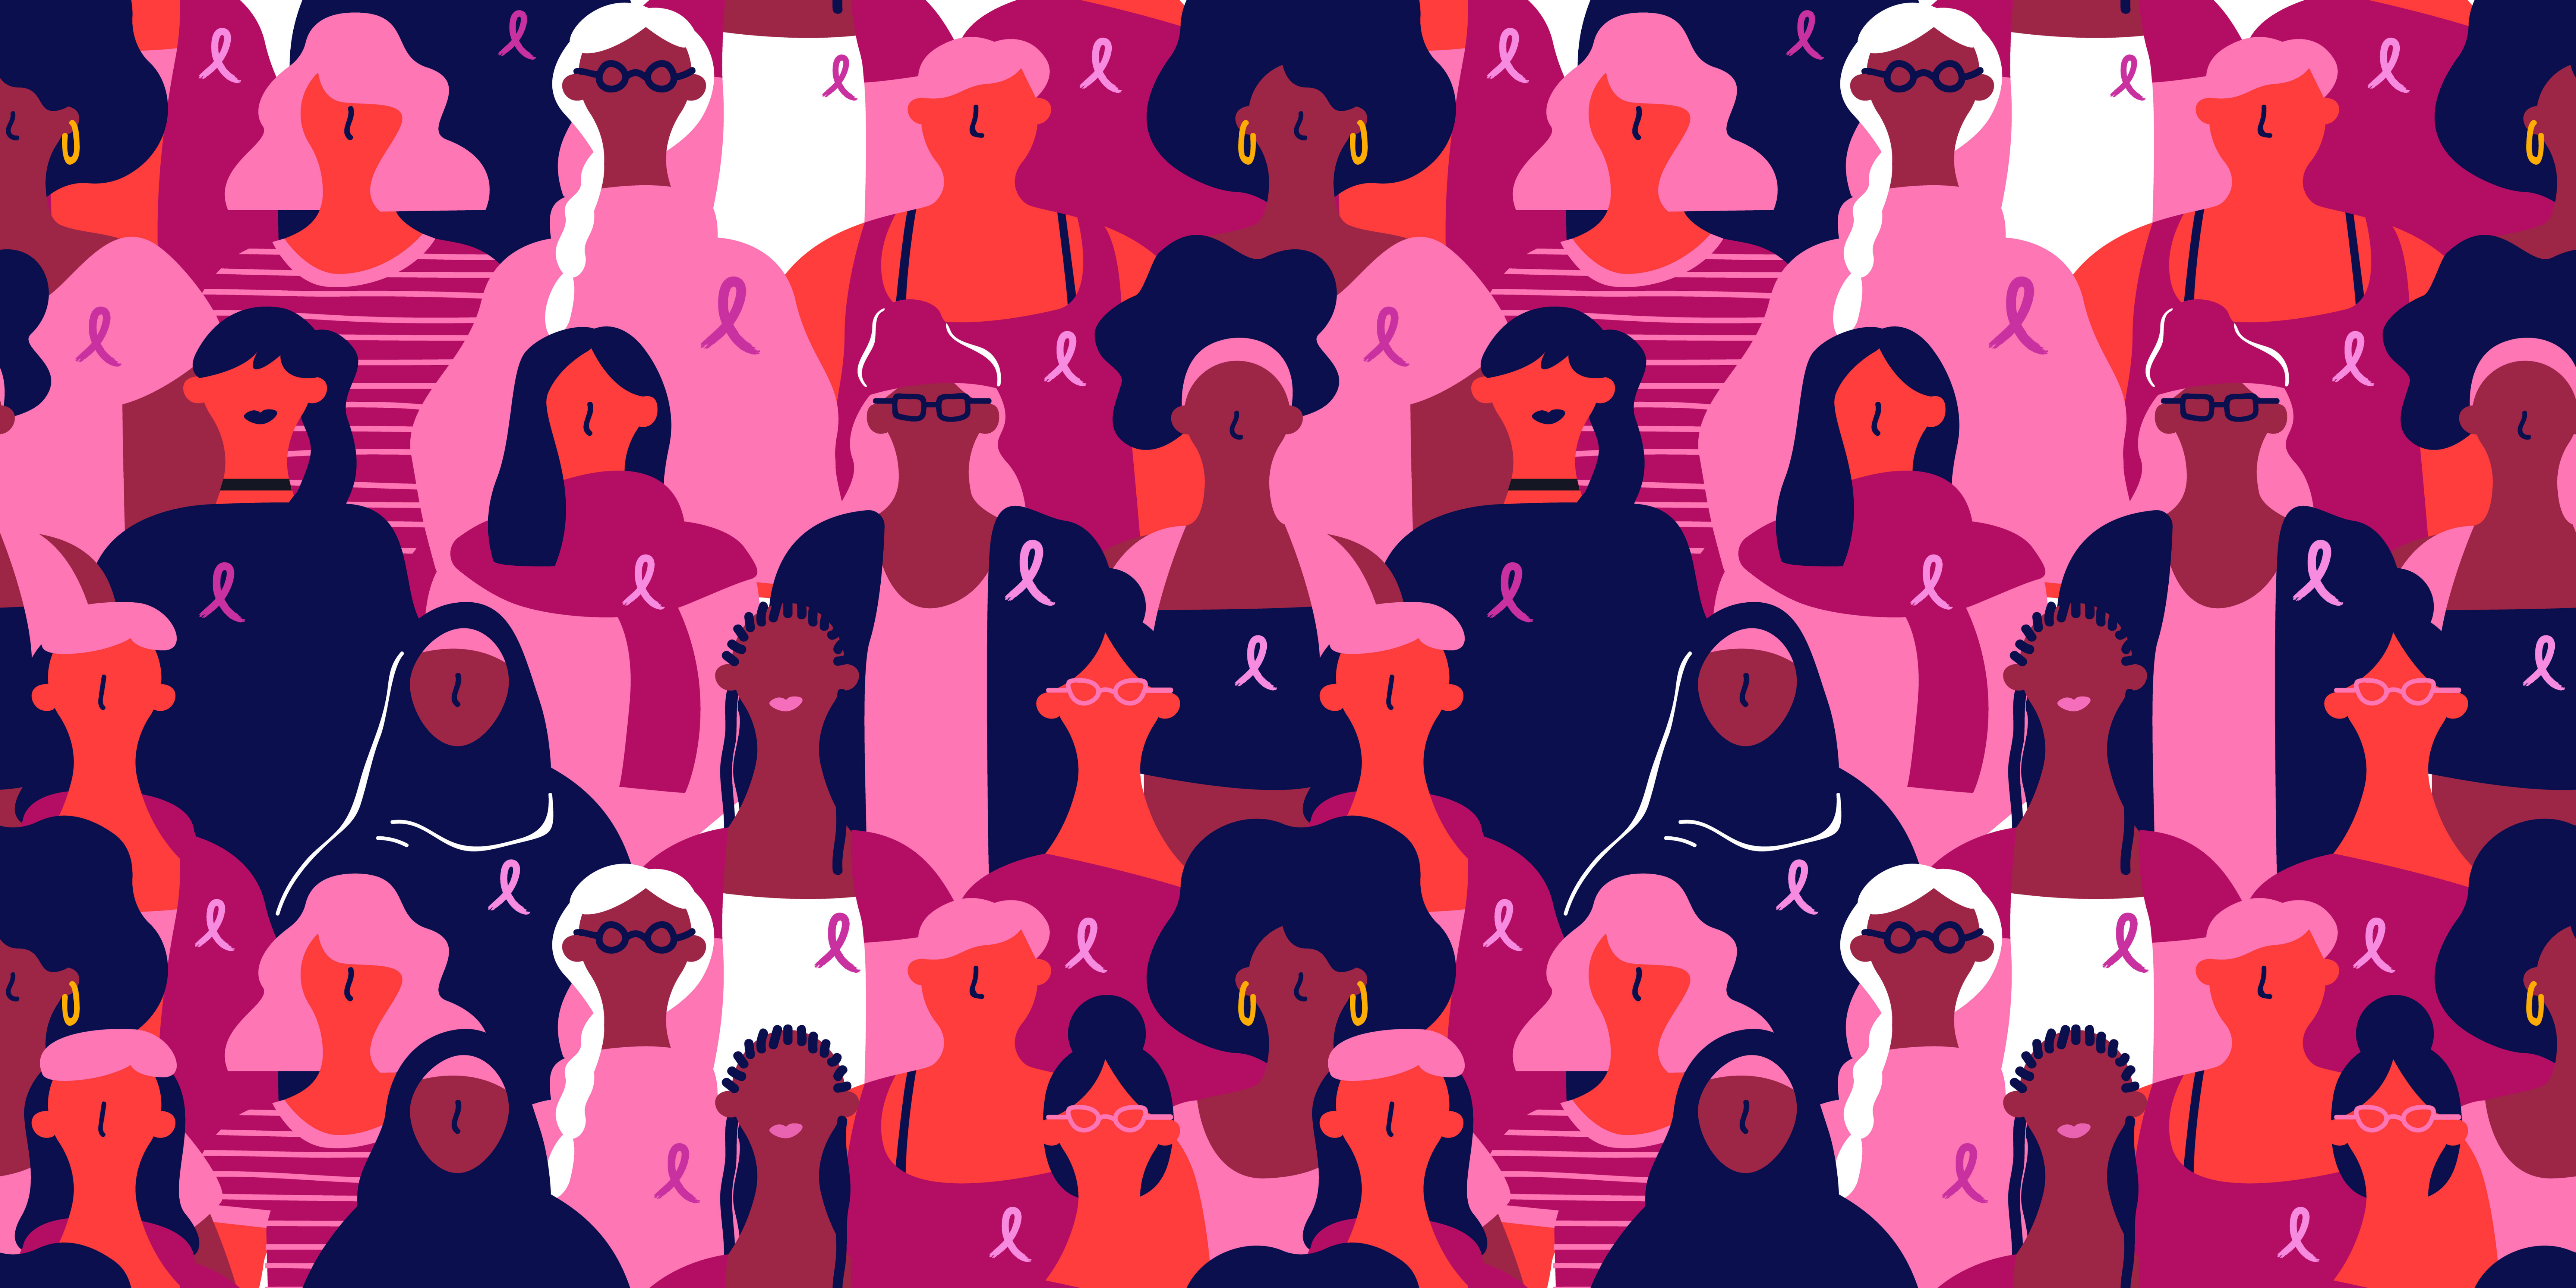 Graphic of multi-racial women wearing pink breast cancer awareness women